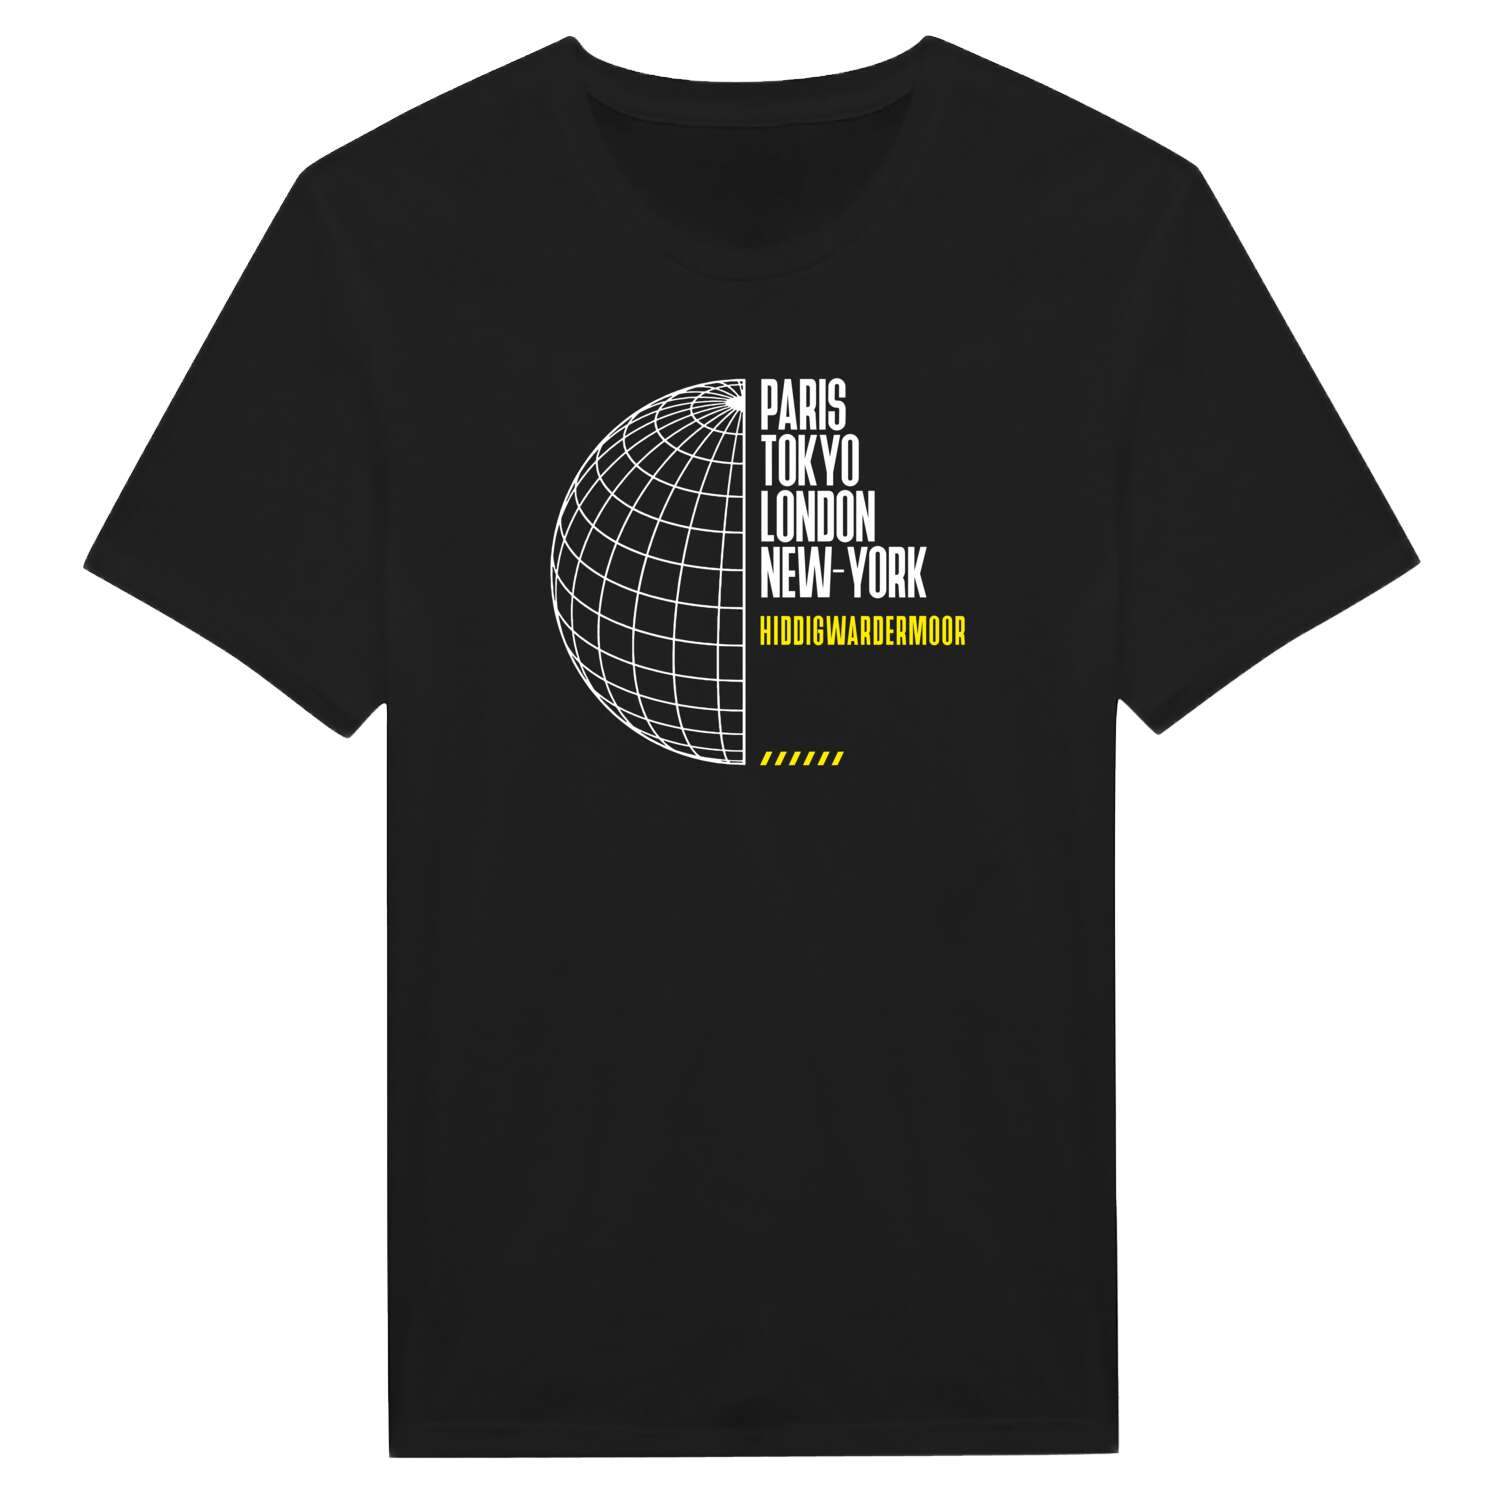 Hiddigwardermoor T-Shirt »Paris Tokyo London«